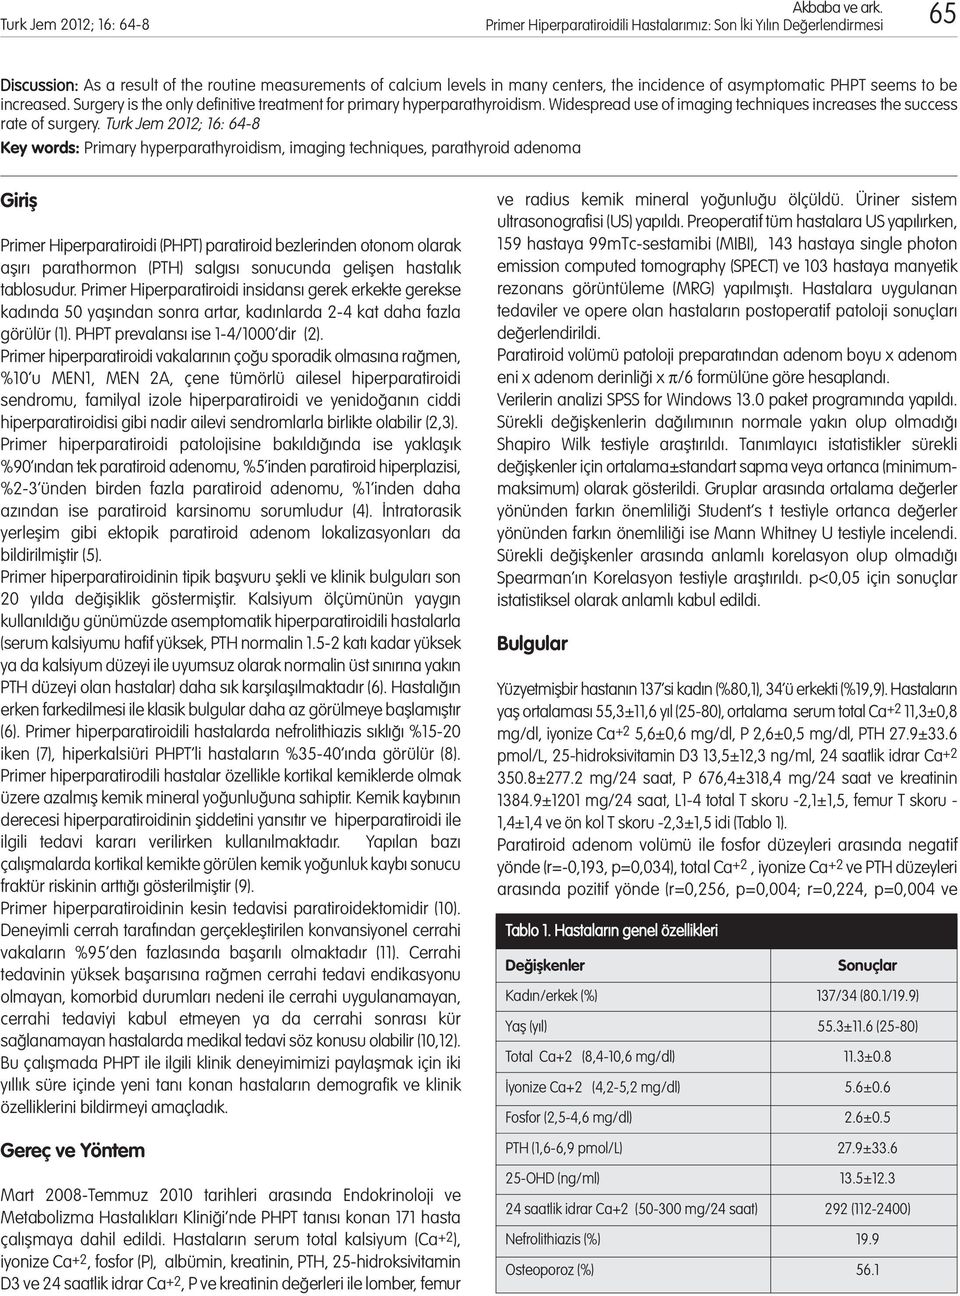 Turk Jem 2012; 16: 64-8 Key words: Primary hyperparathyroidism, imaging techniques, parathyroid adenoma Giriş Primer Hiperparatiroidi (PHPT) paratiroid bezlerinden otonom olarak aşırı parathormon